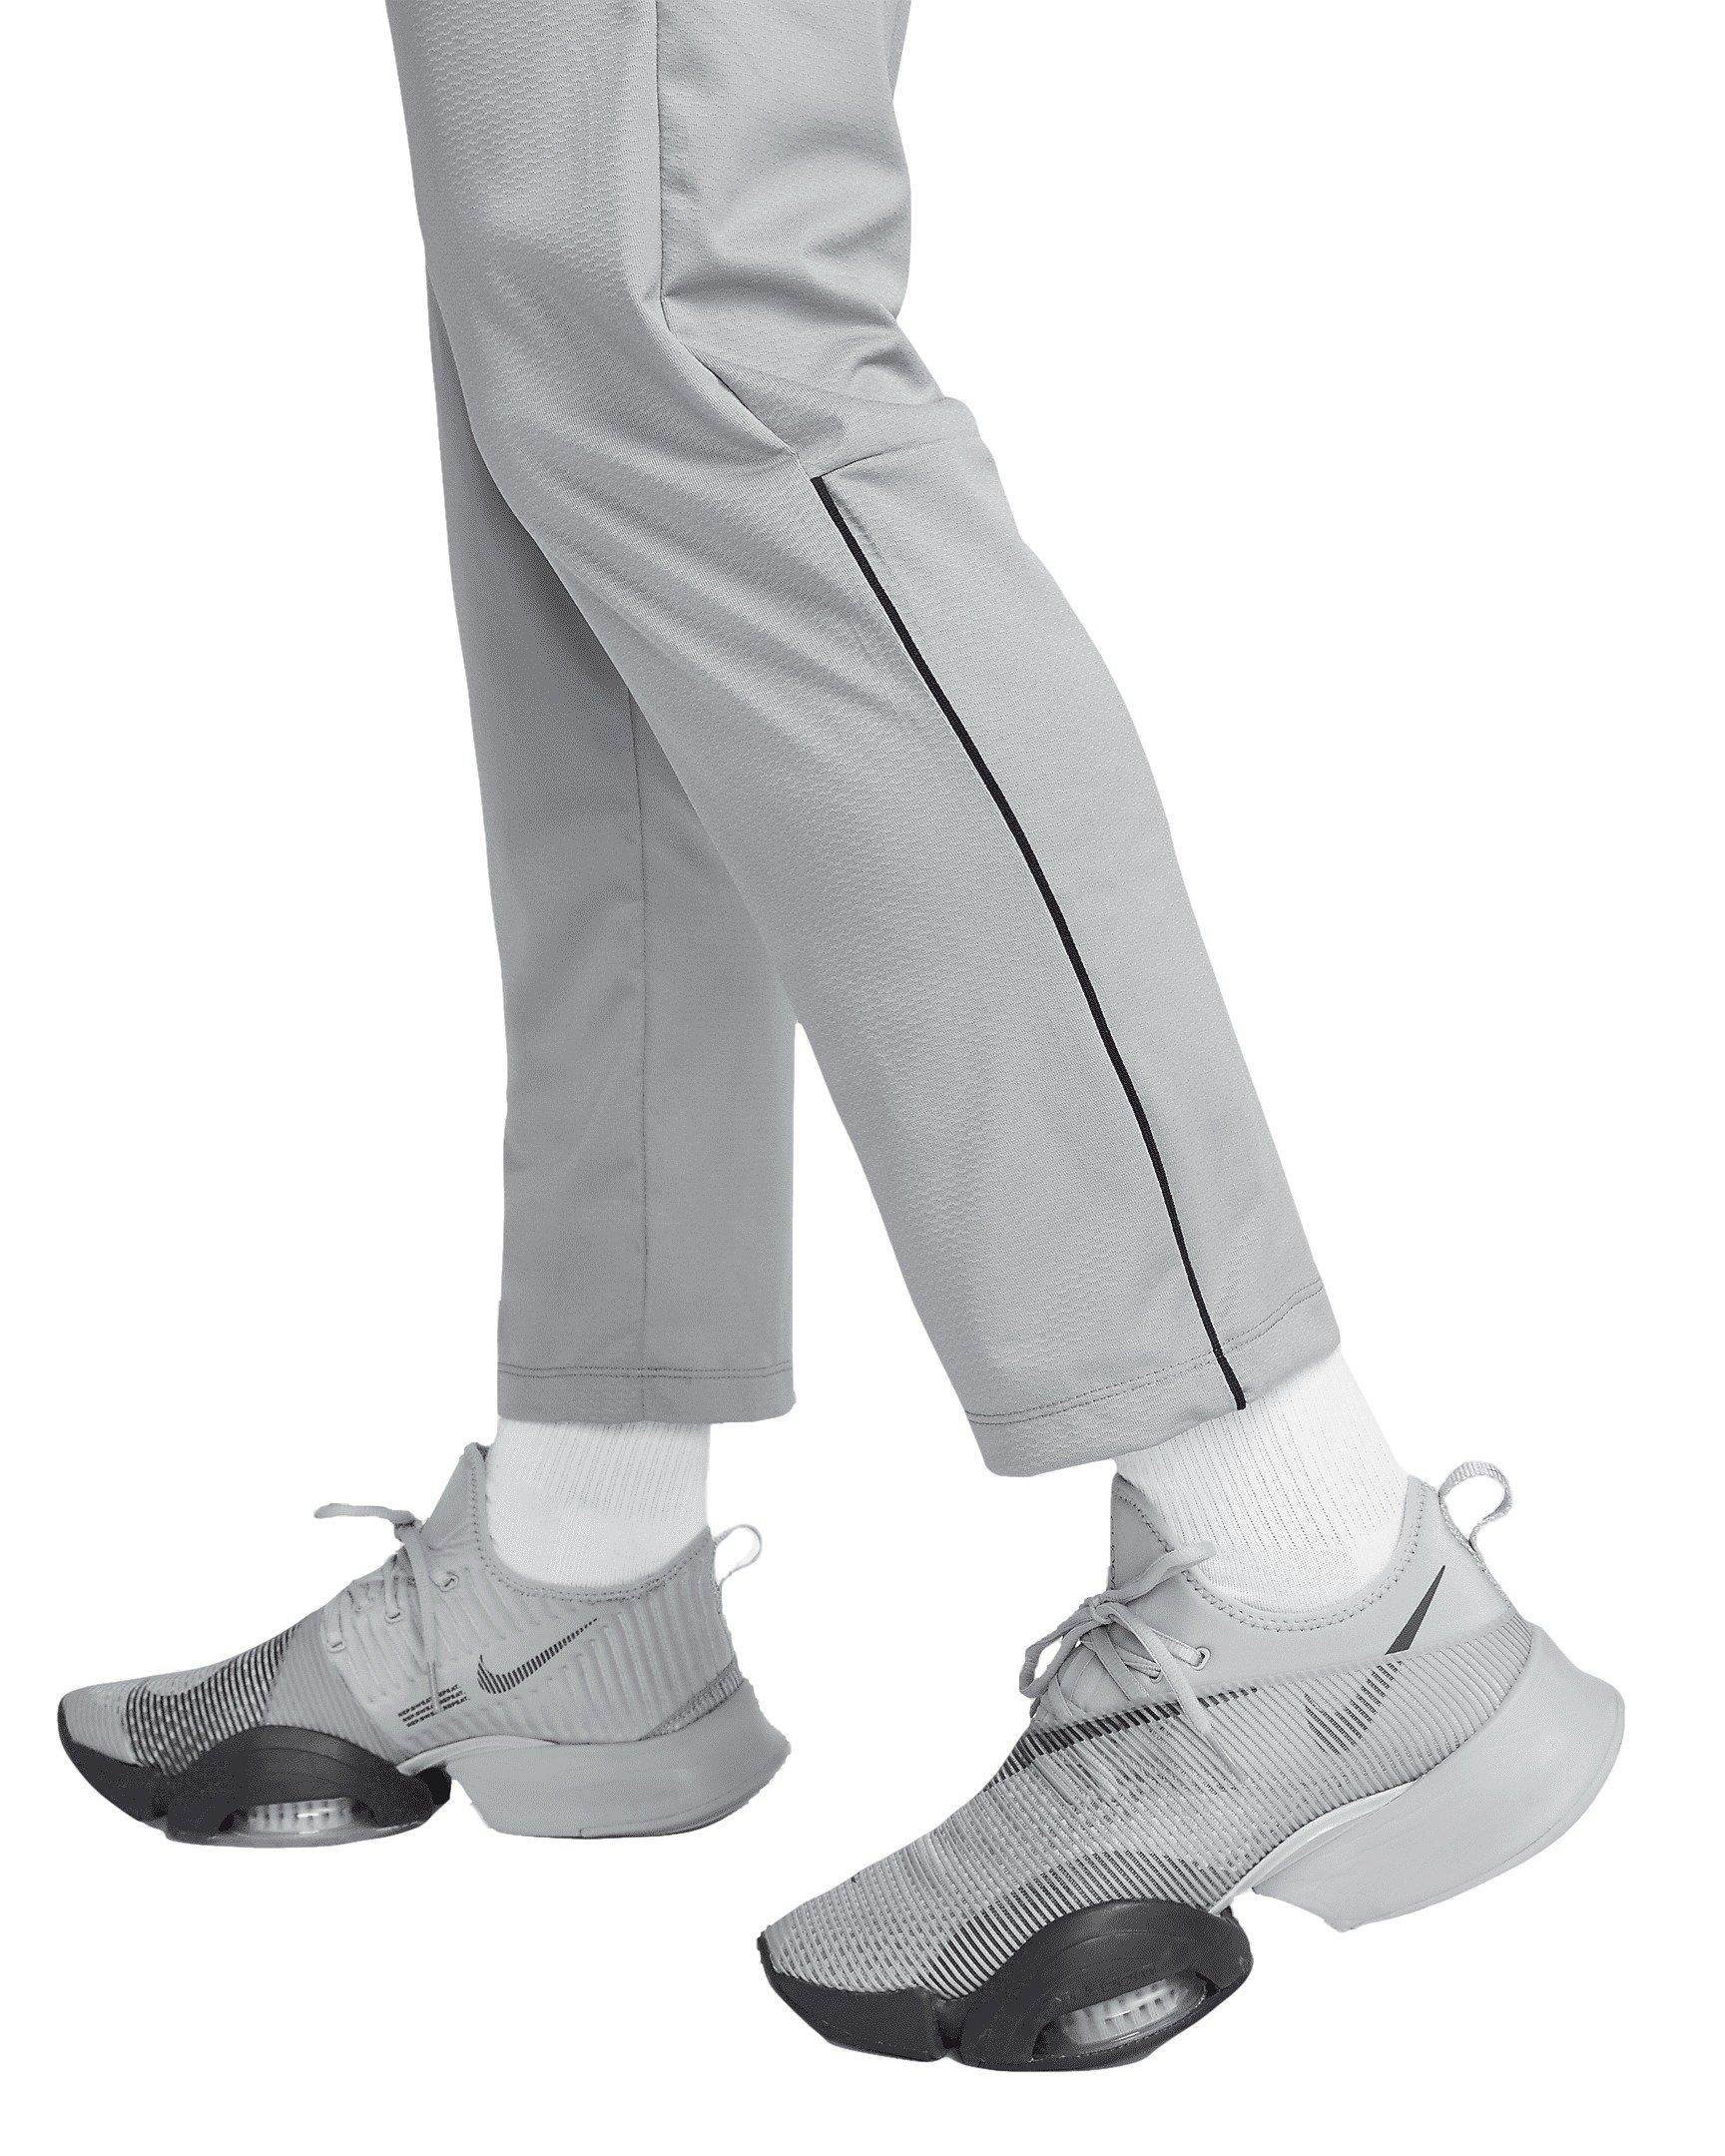  Nike Men's Training Epic Knit Pants (Smoke Grey/Black) Size 3XL  : Clothing, Shoes & Jewelry